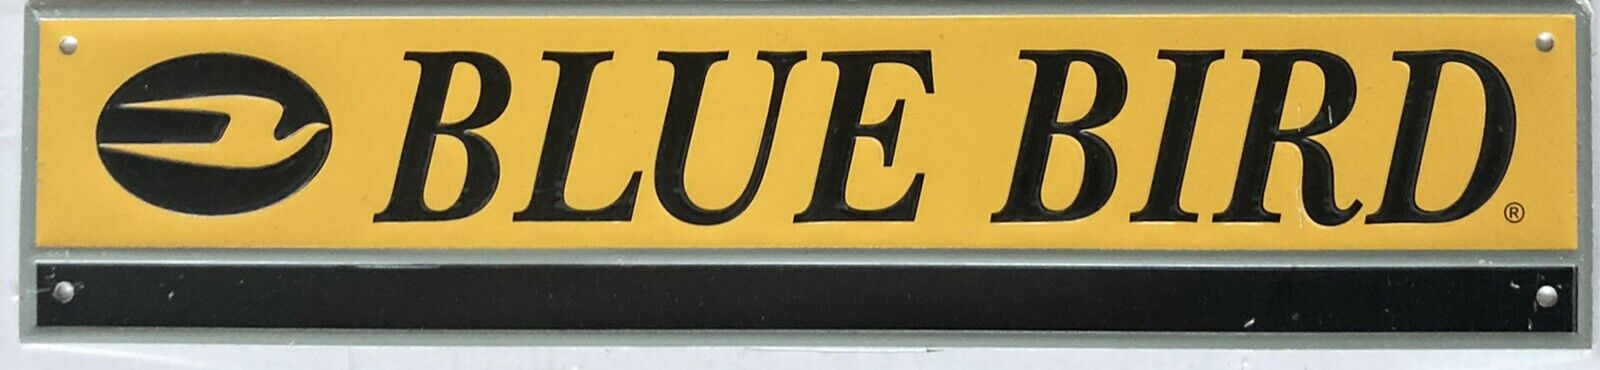 New - Blue Bird School Bus Metal Emblem Sign w/ Adhesive Backing 15\